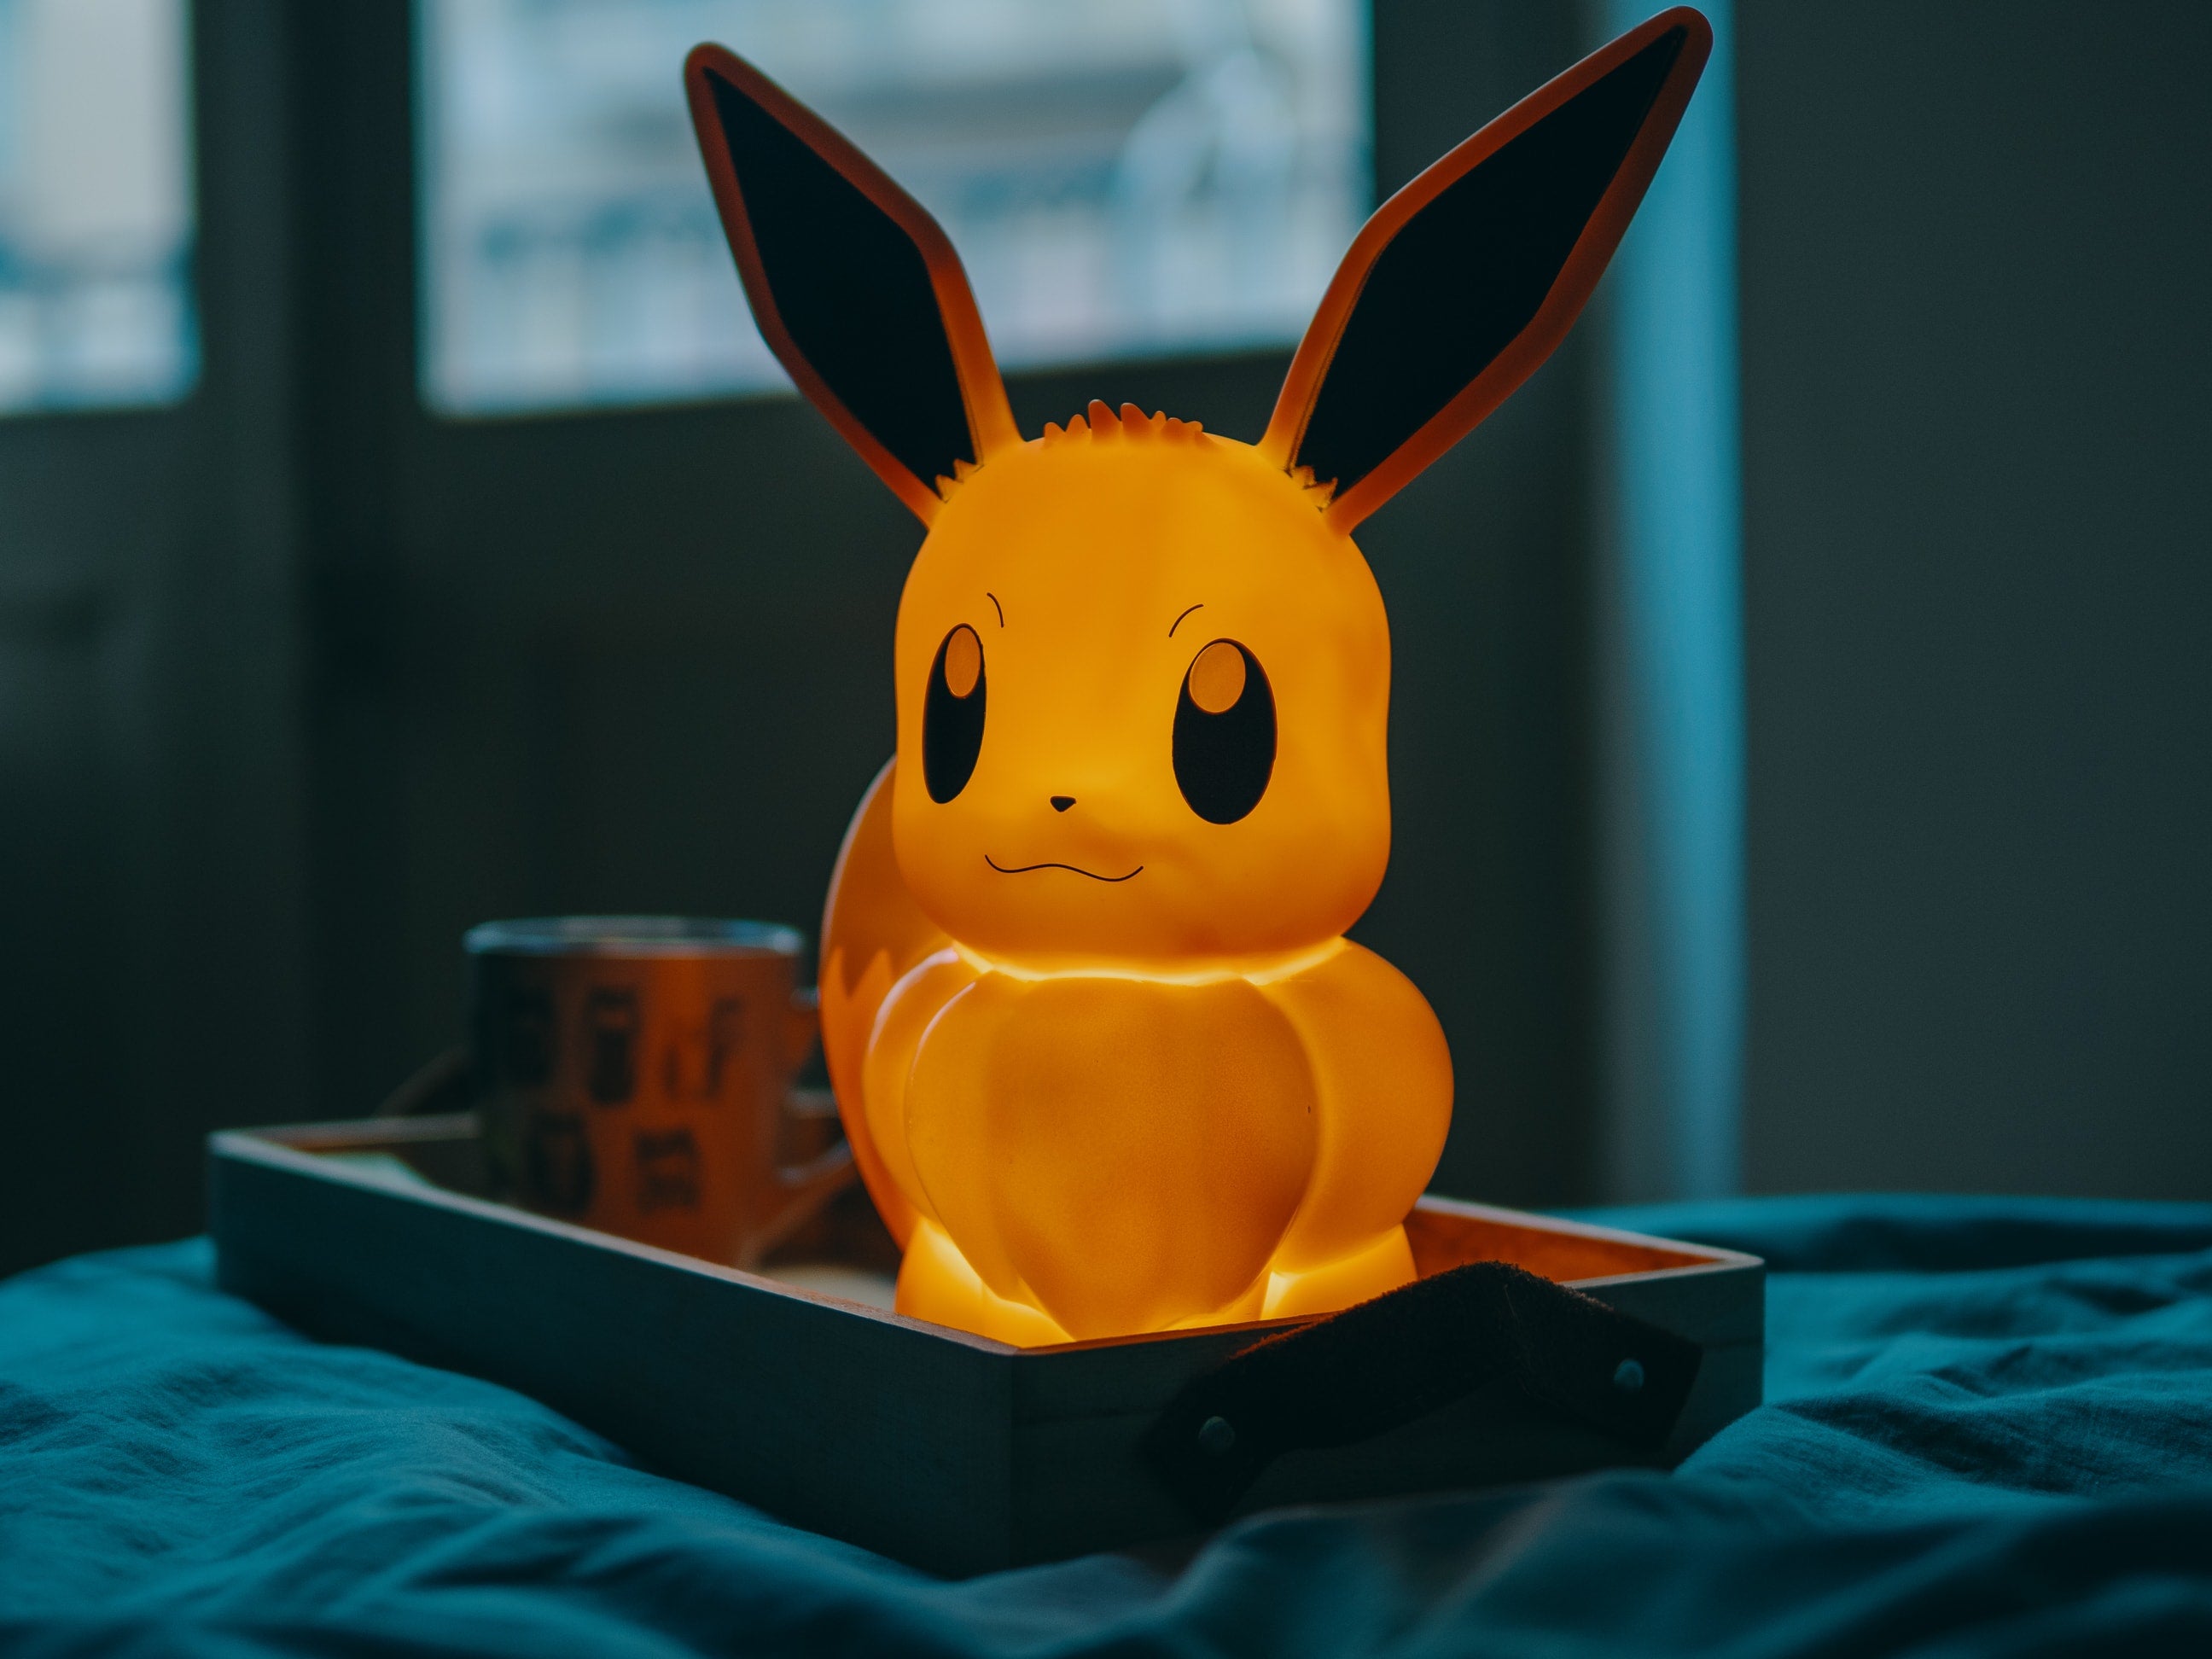 Figurine Lumineuse Reveil Numerique - Pokemon - Evoli - POKEMON